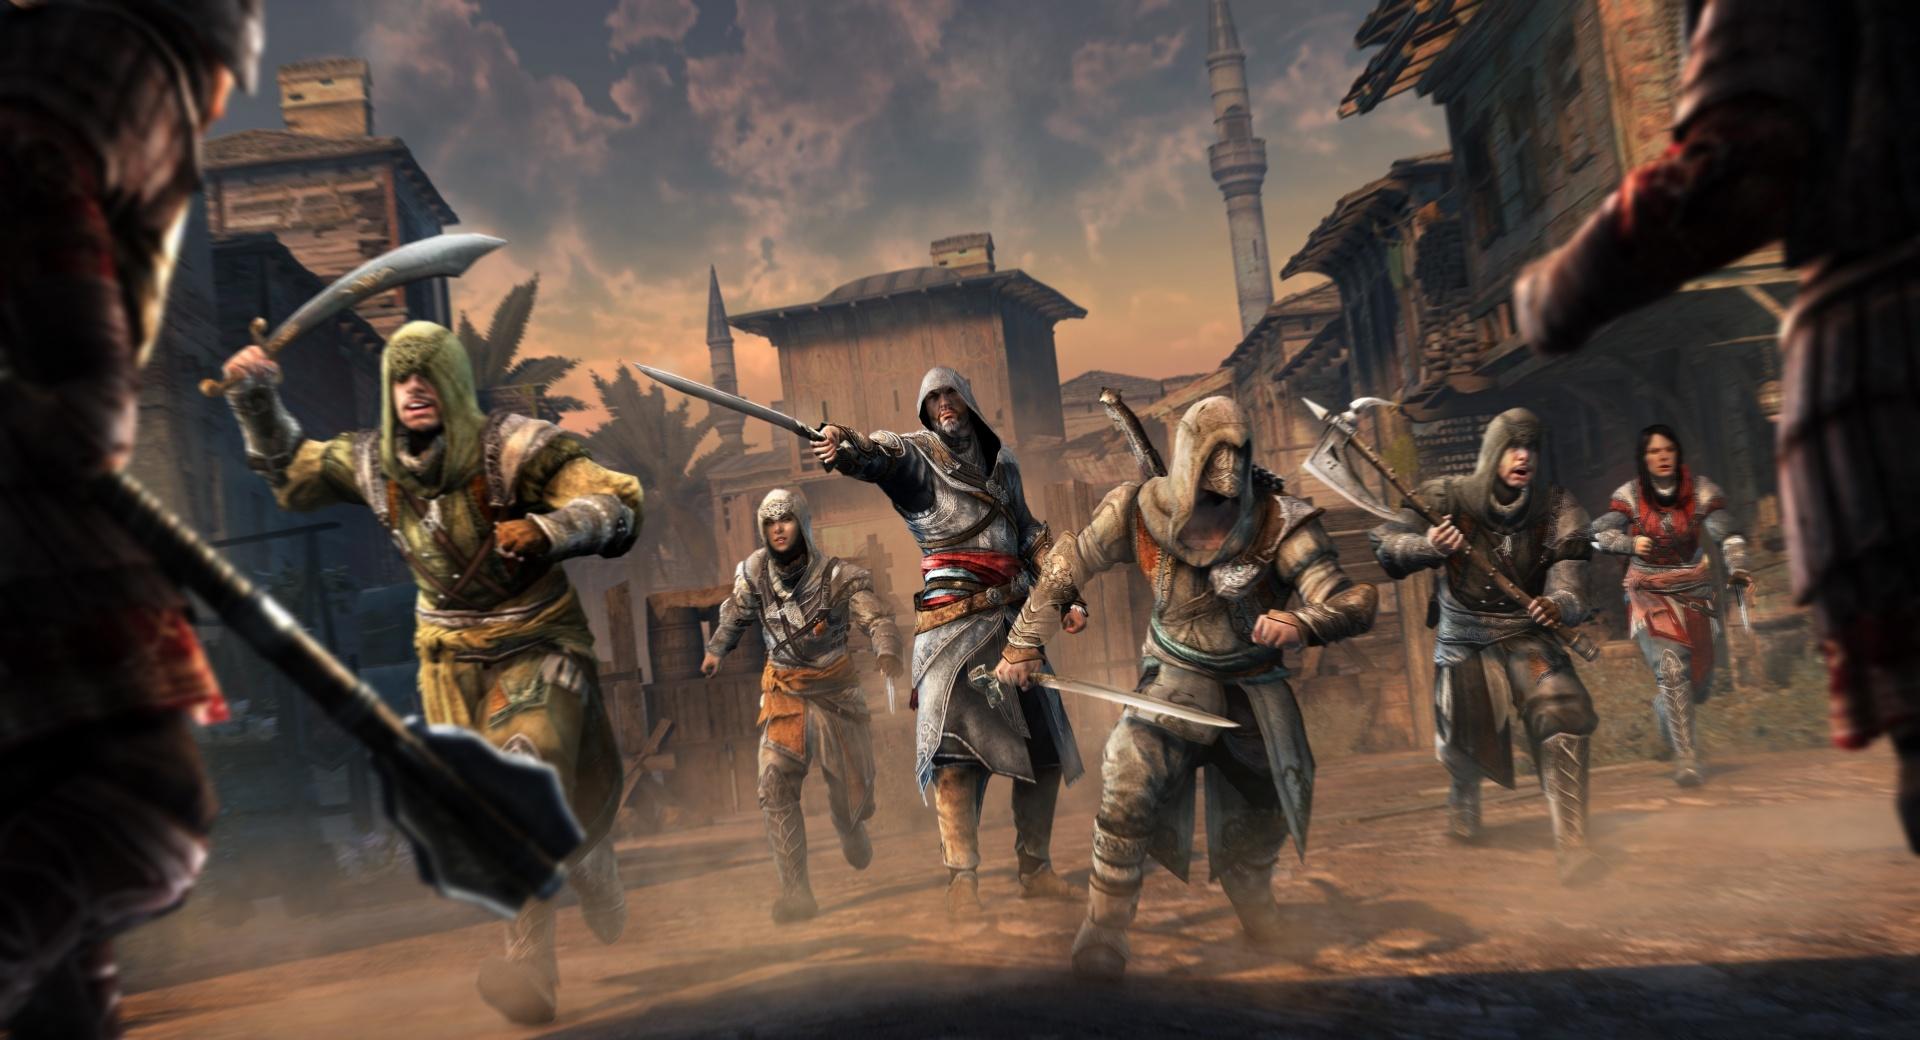 Assassins Creed Revelations Screenshots at 2048 x 2048 iPad size wallpapers HD quality